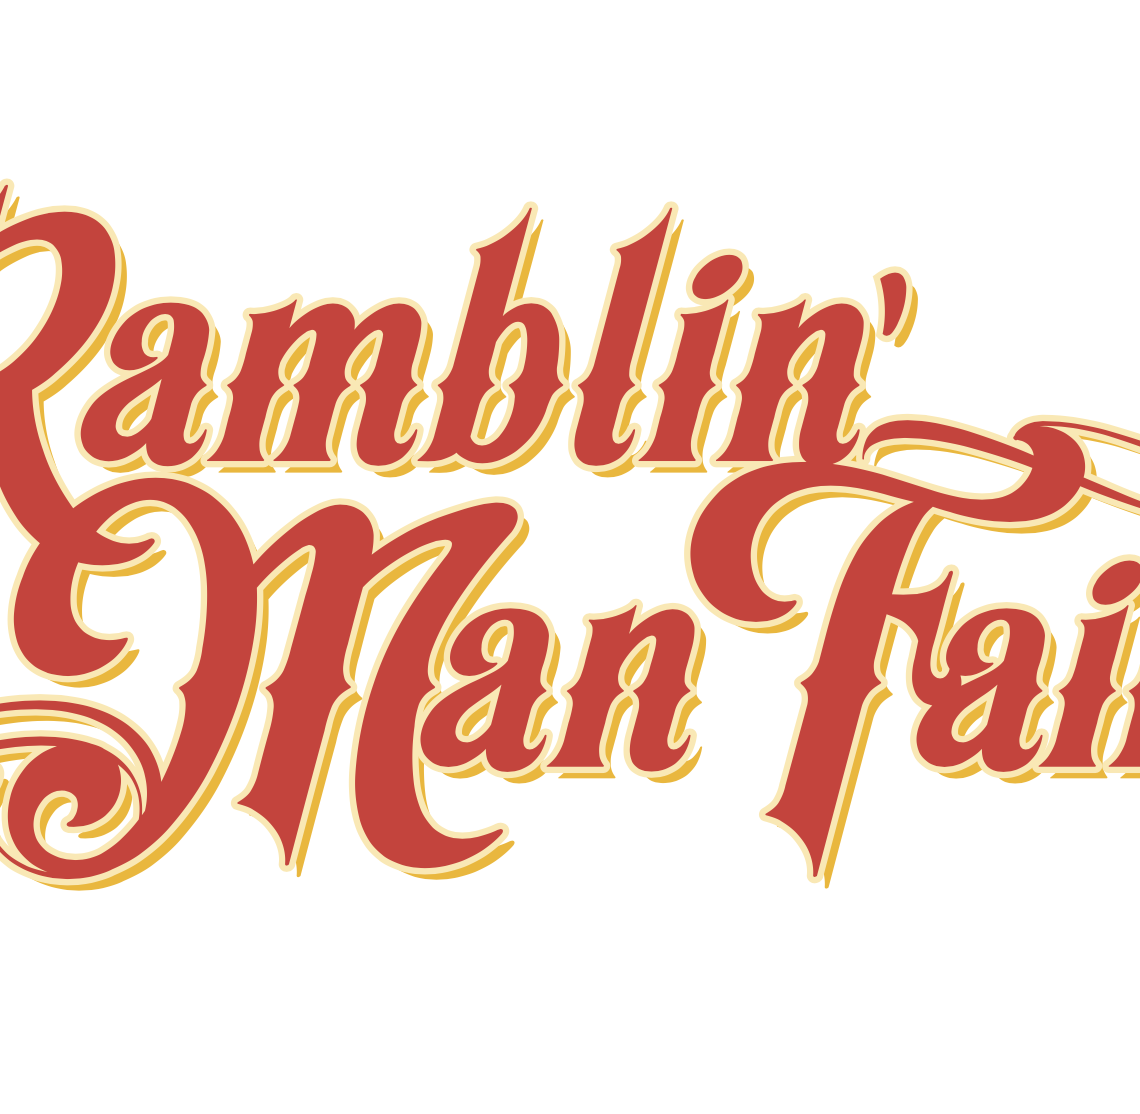 Ramblin’ Man Fair. Mote Park, Maidstone. Sunday 21 July 2019.